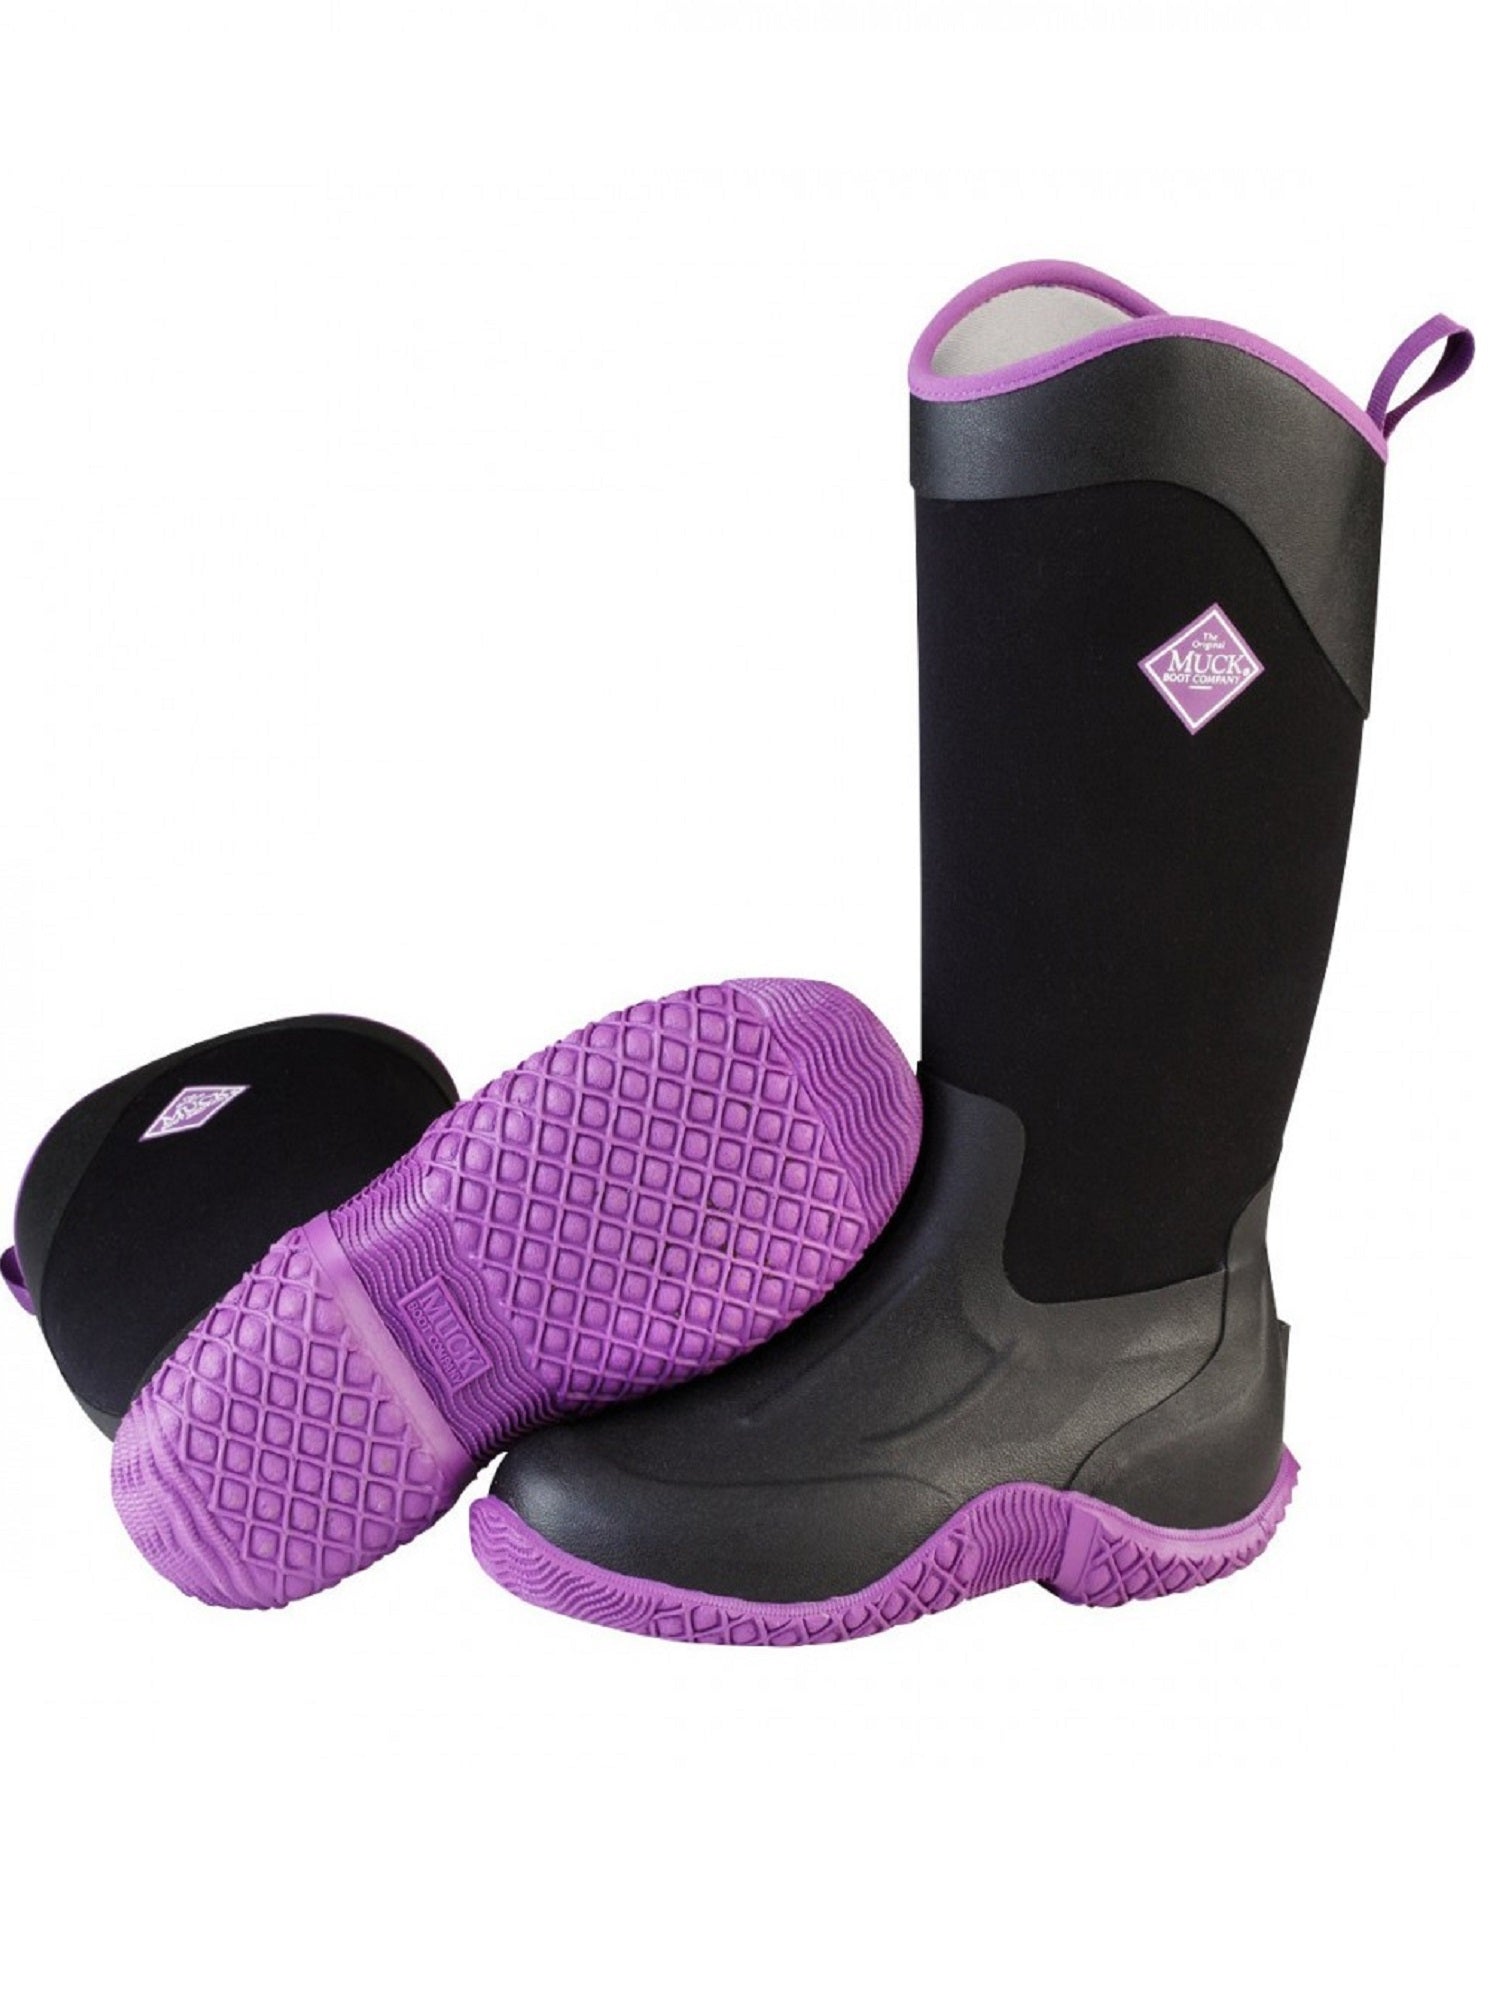 MuckBoots Women's Tack II Tall All Purpose Purple Work Boot, Size 6